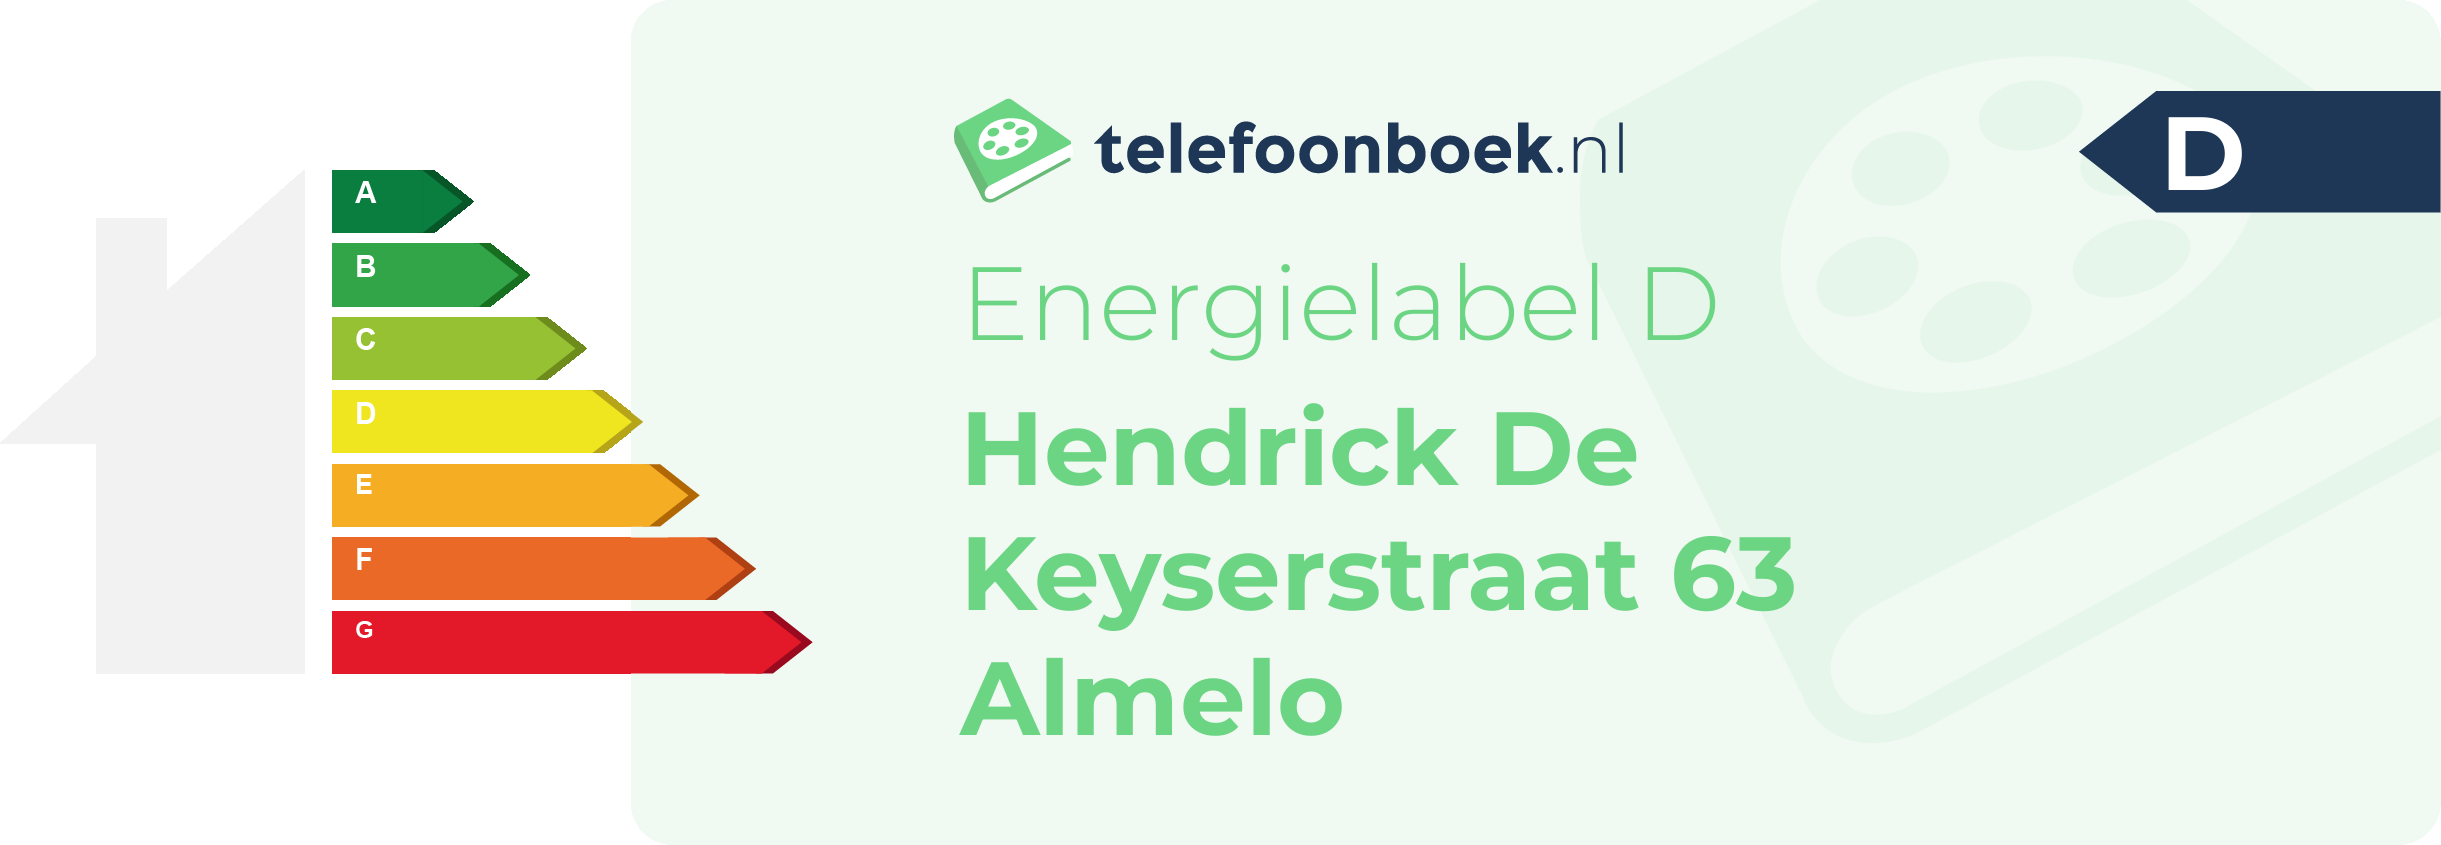 Energielabel Hendrick De Keyserstraat 63 Almelo